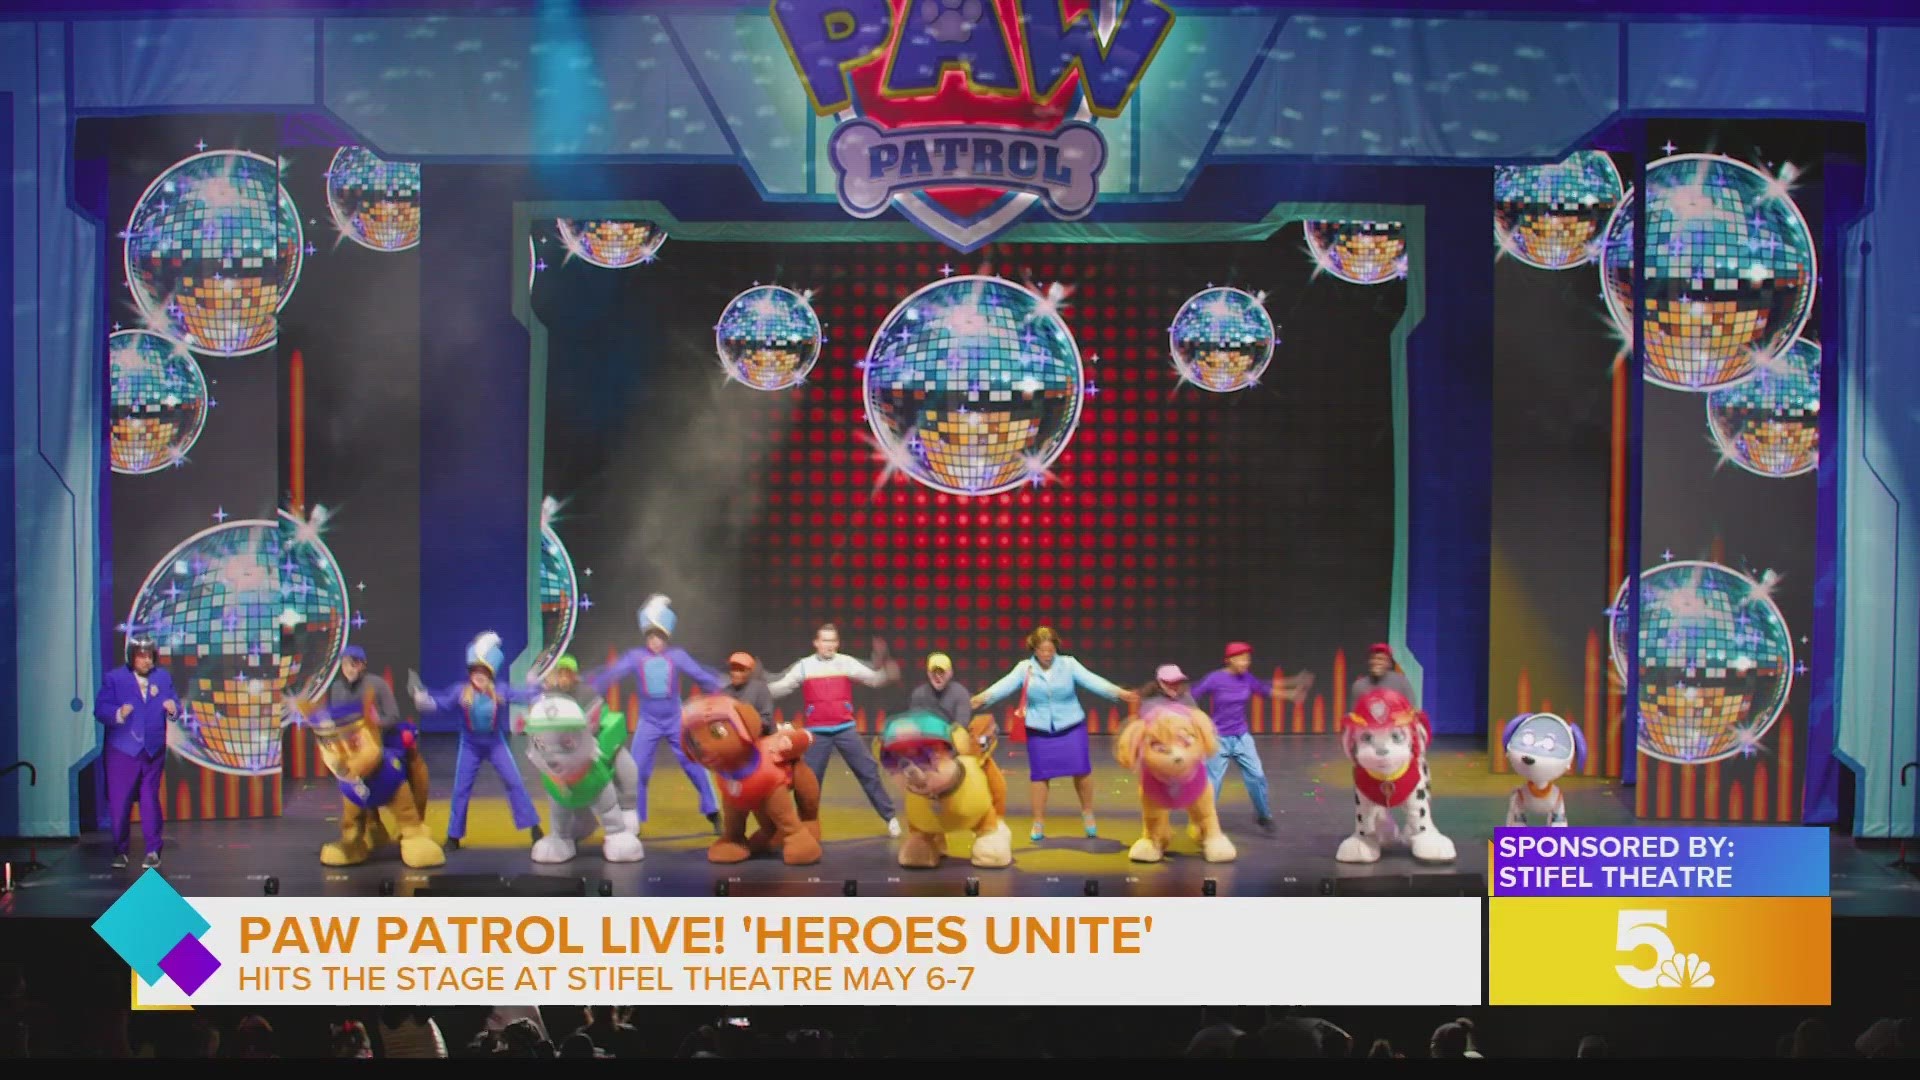 PAW Patrol Live! 'Heroes Unite' is making it's way to the Stifel